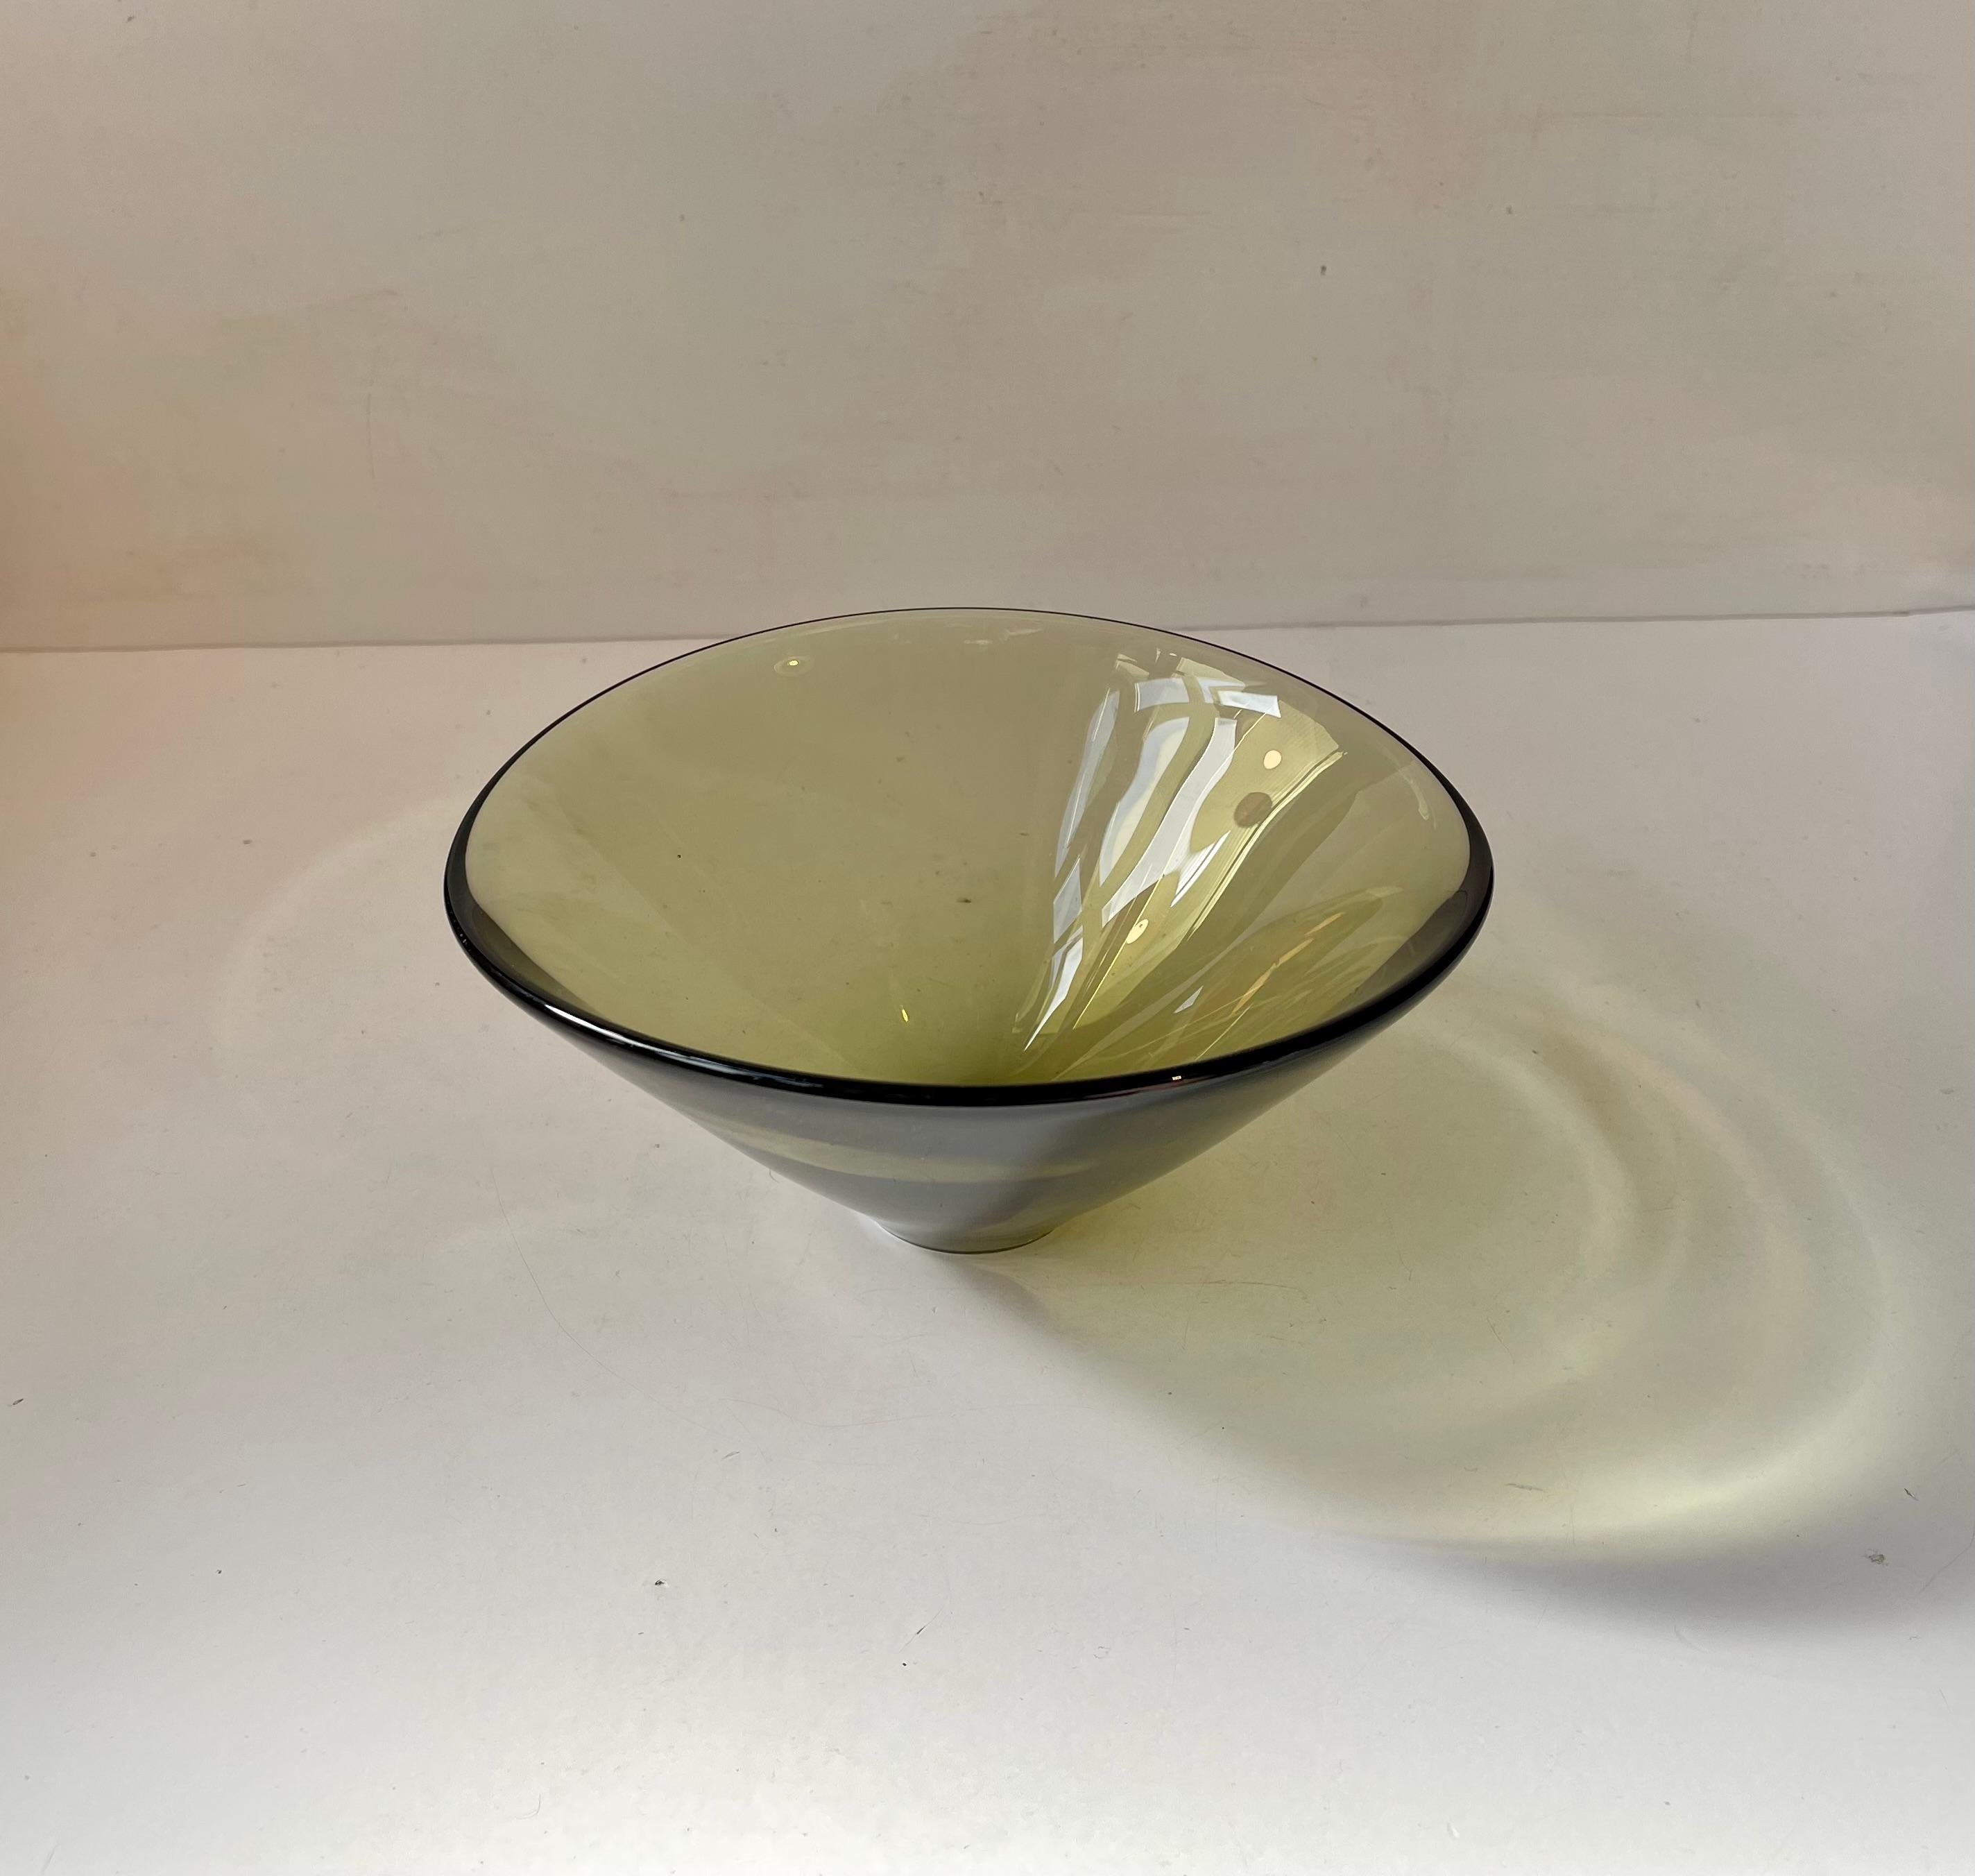 Scandinavian Modern Disko Olive Green Glass Bowl by Per Lutken for Holmegaard, Scandinavian - 1959